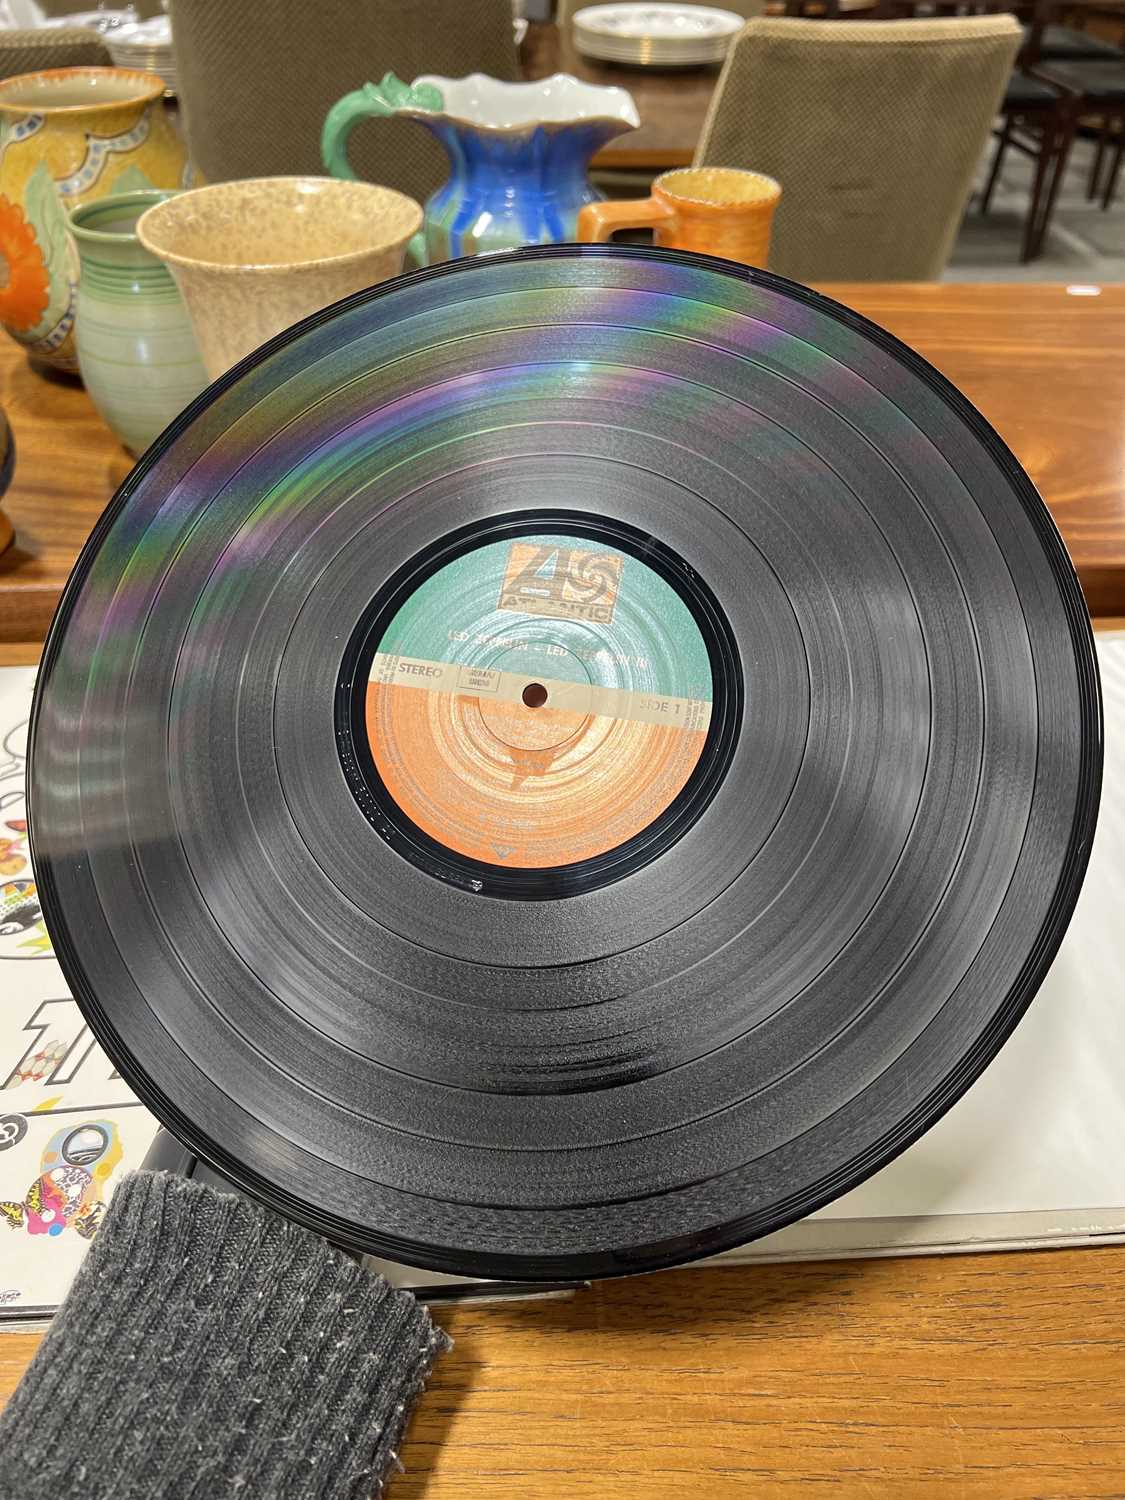 Eleven Led Zeppelin and Black Sabbath vinyl LP records - Image 5 of 6